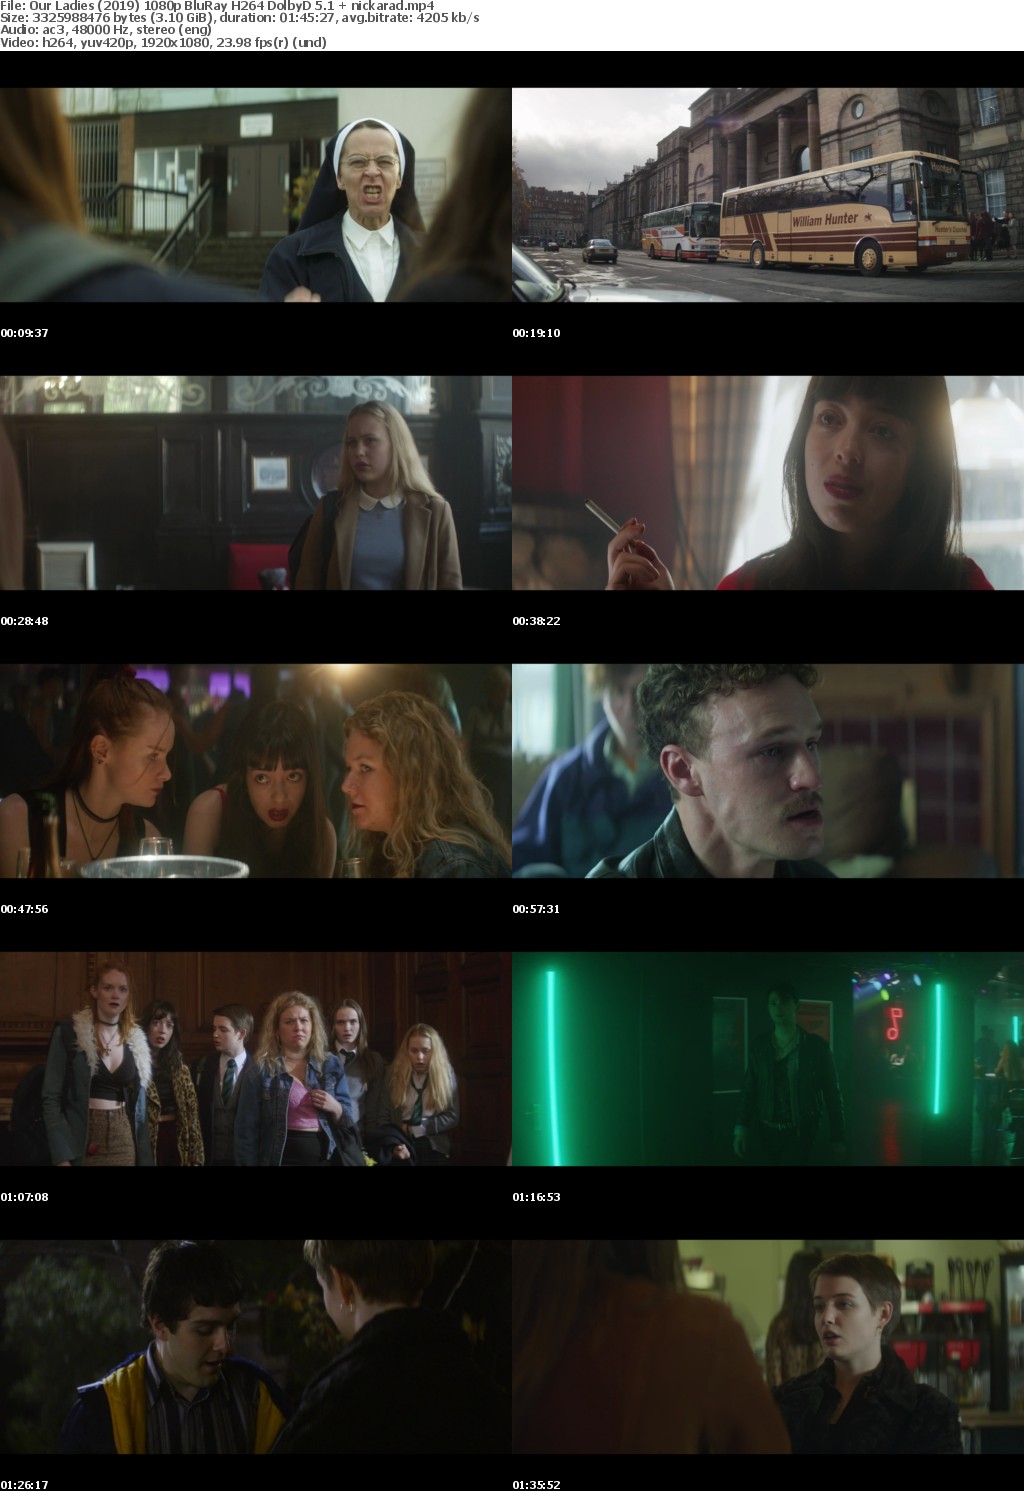 Our Ladies (2019) 1080p BluRay H264 DolbyD 5 1 nickarad